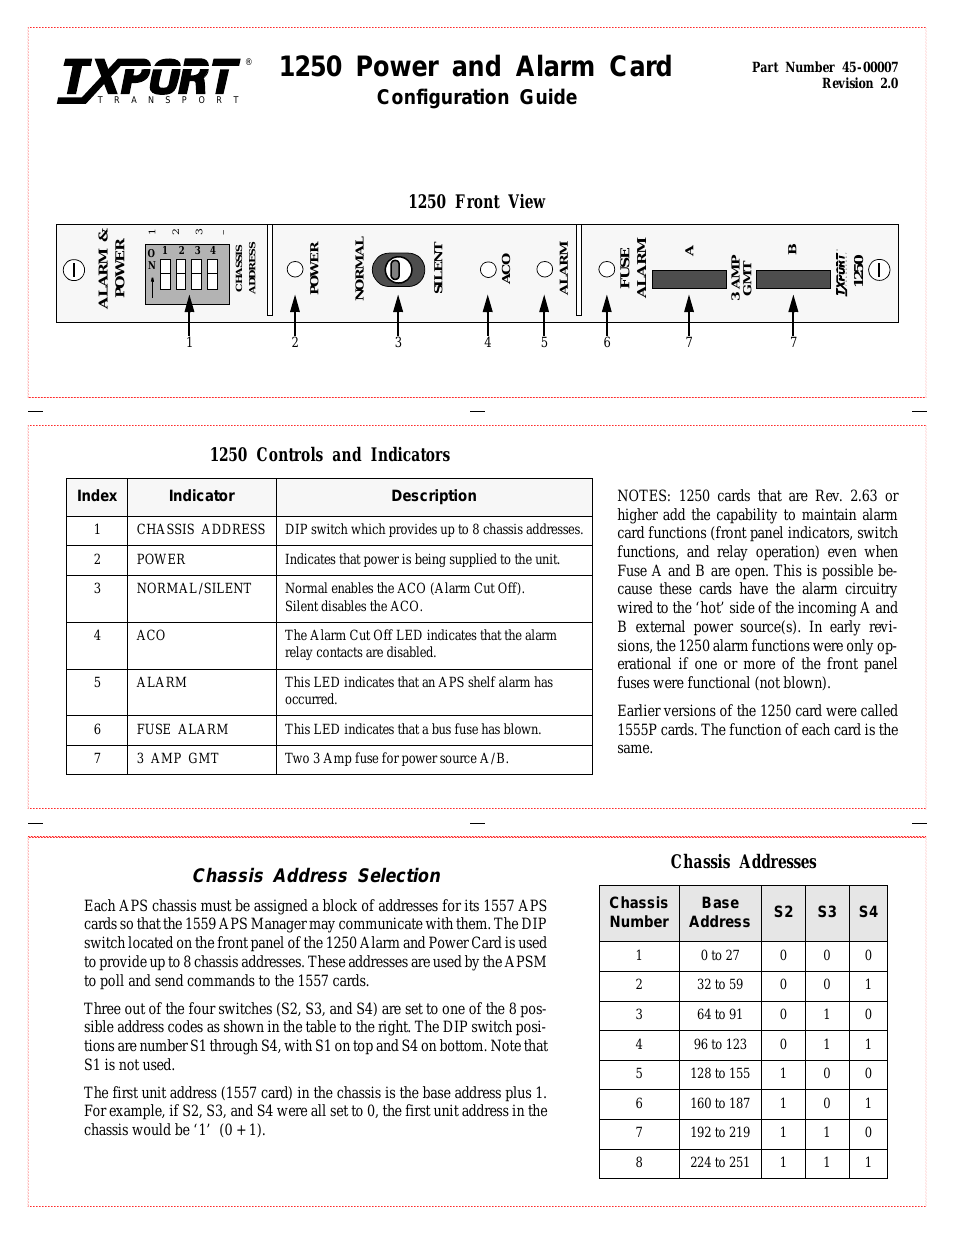 1250 (CG) Configuration/Installation Guide